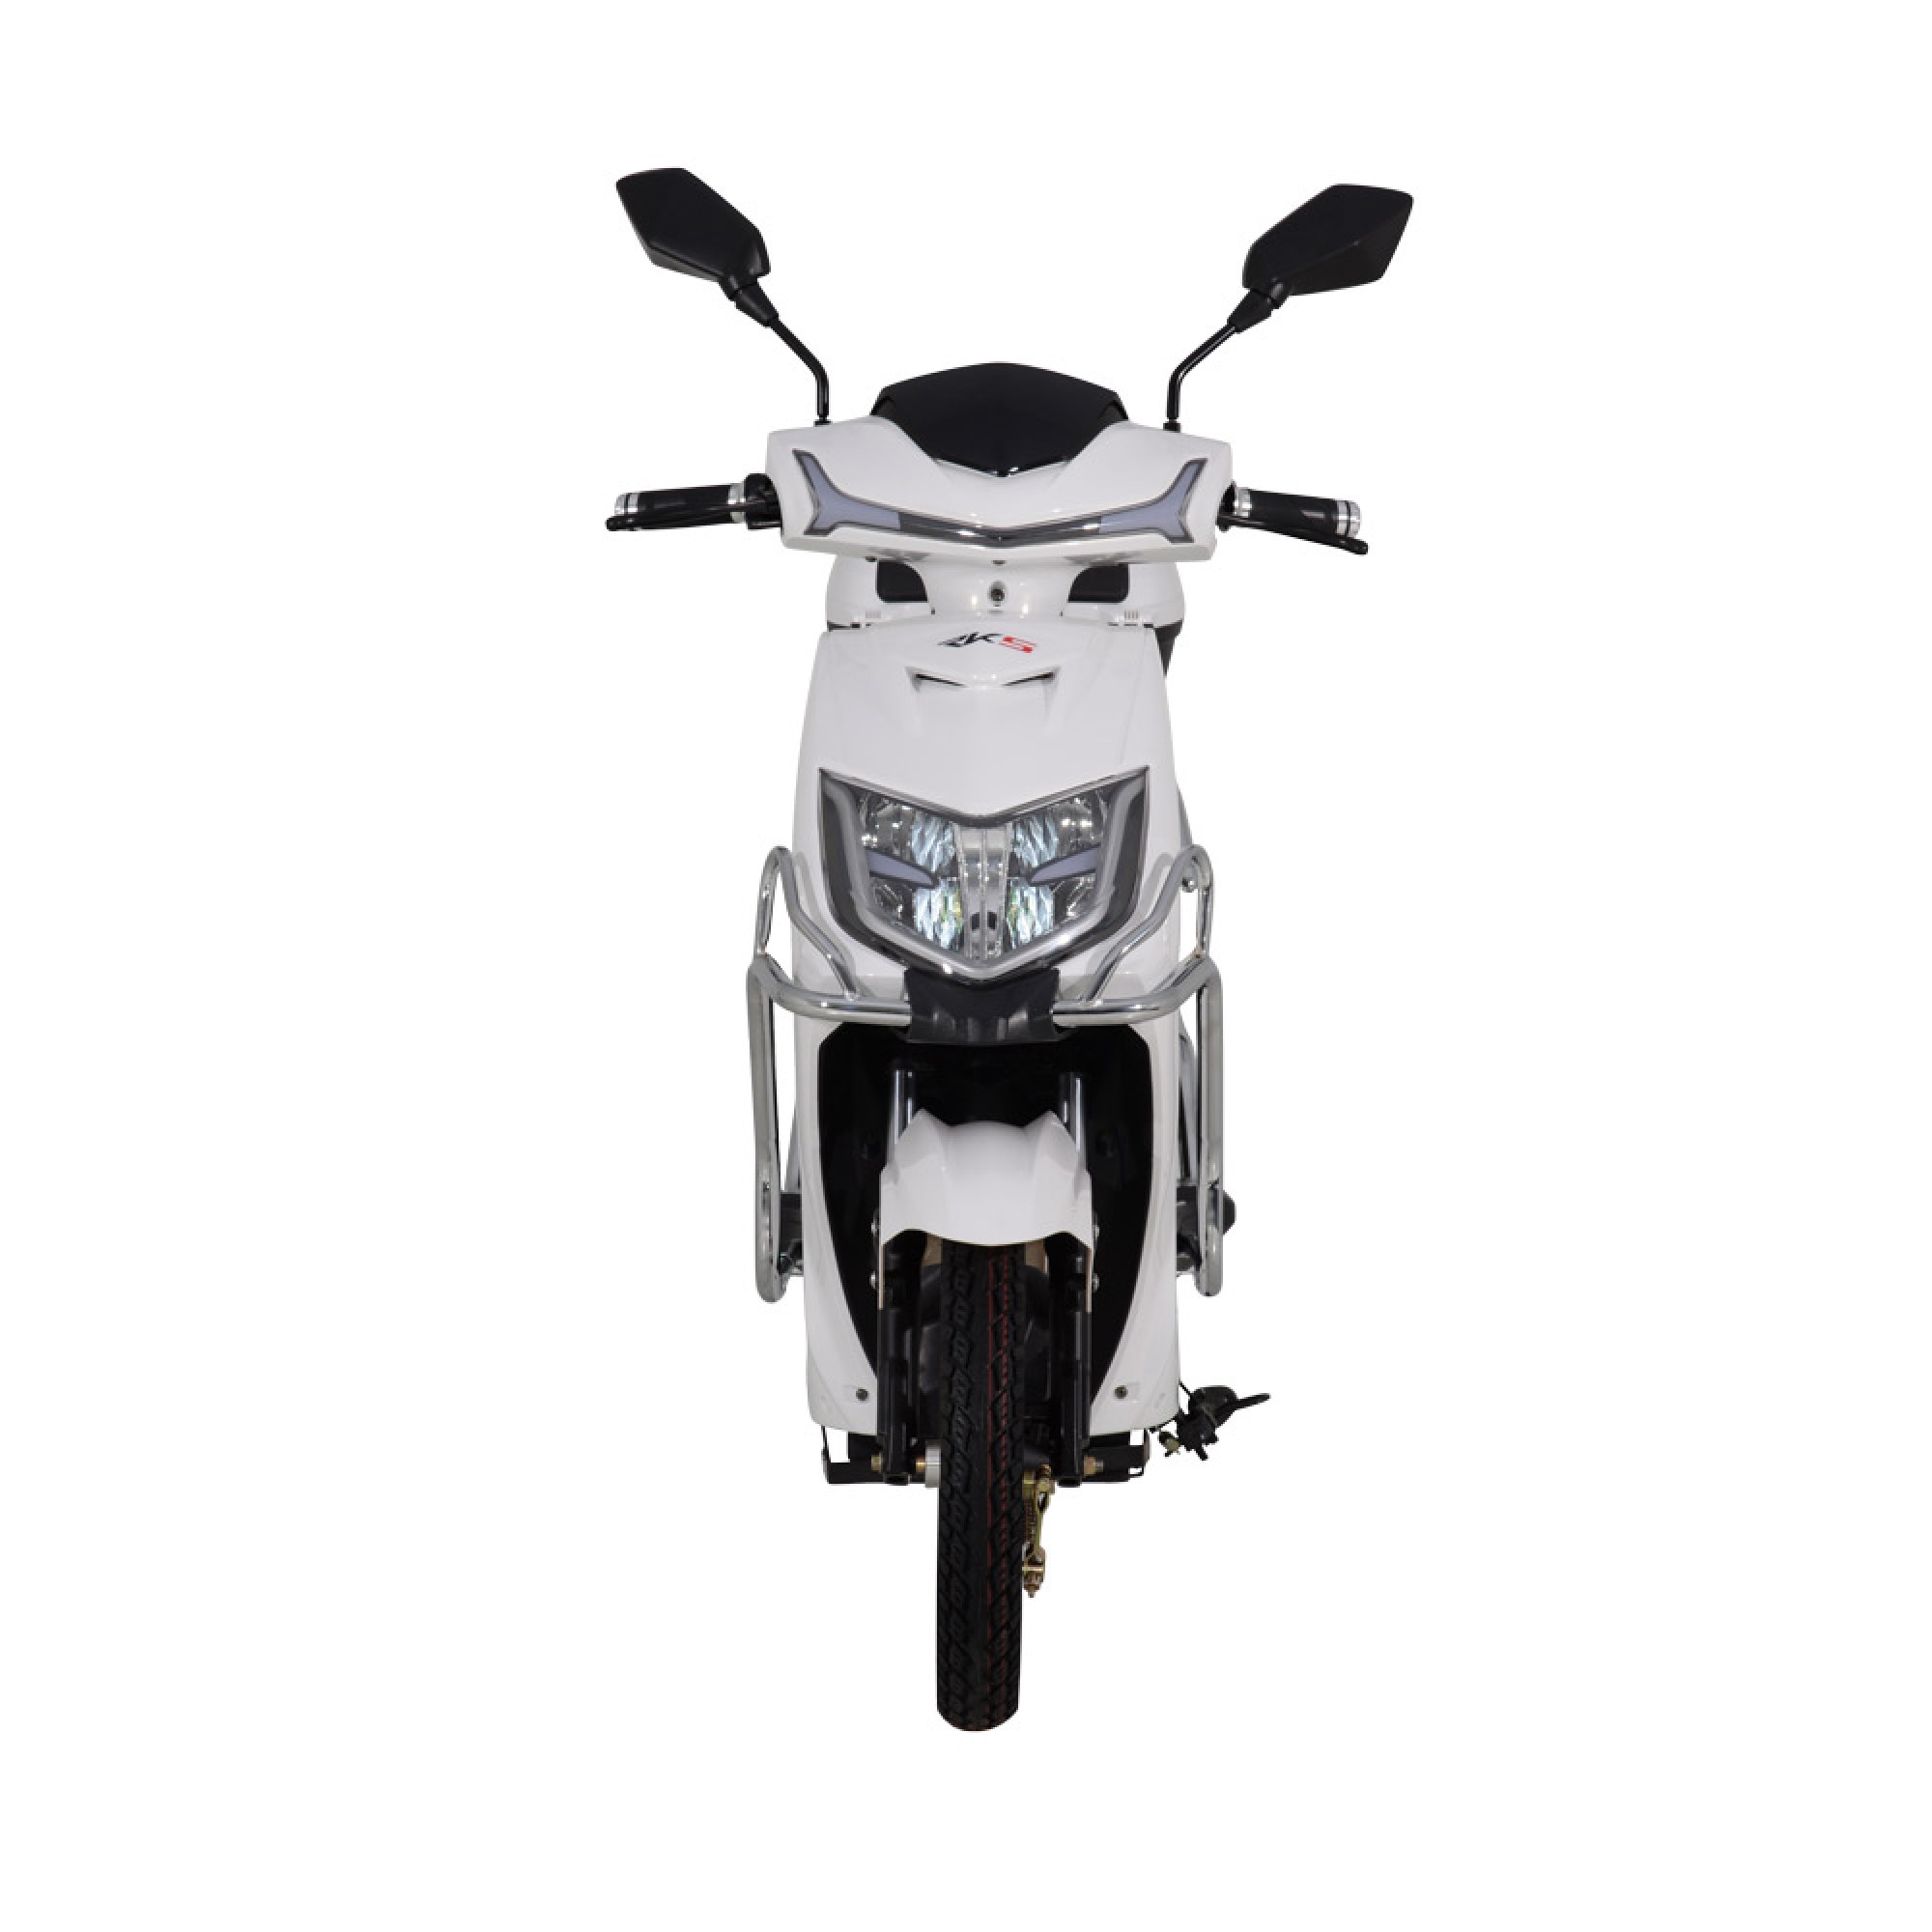 Eco Rider MX Pro RKS